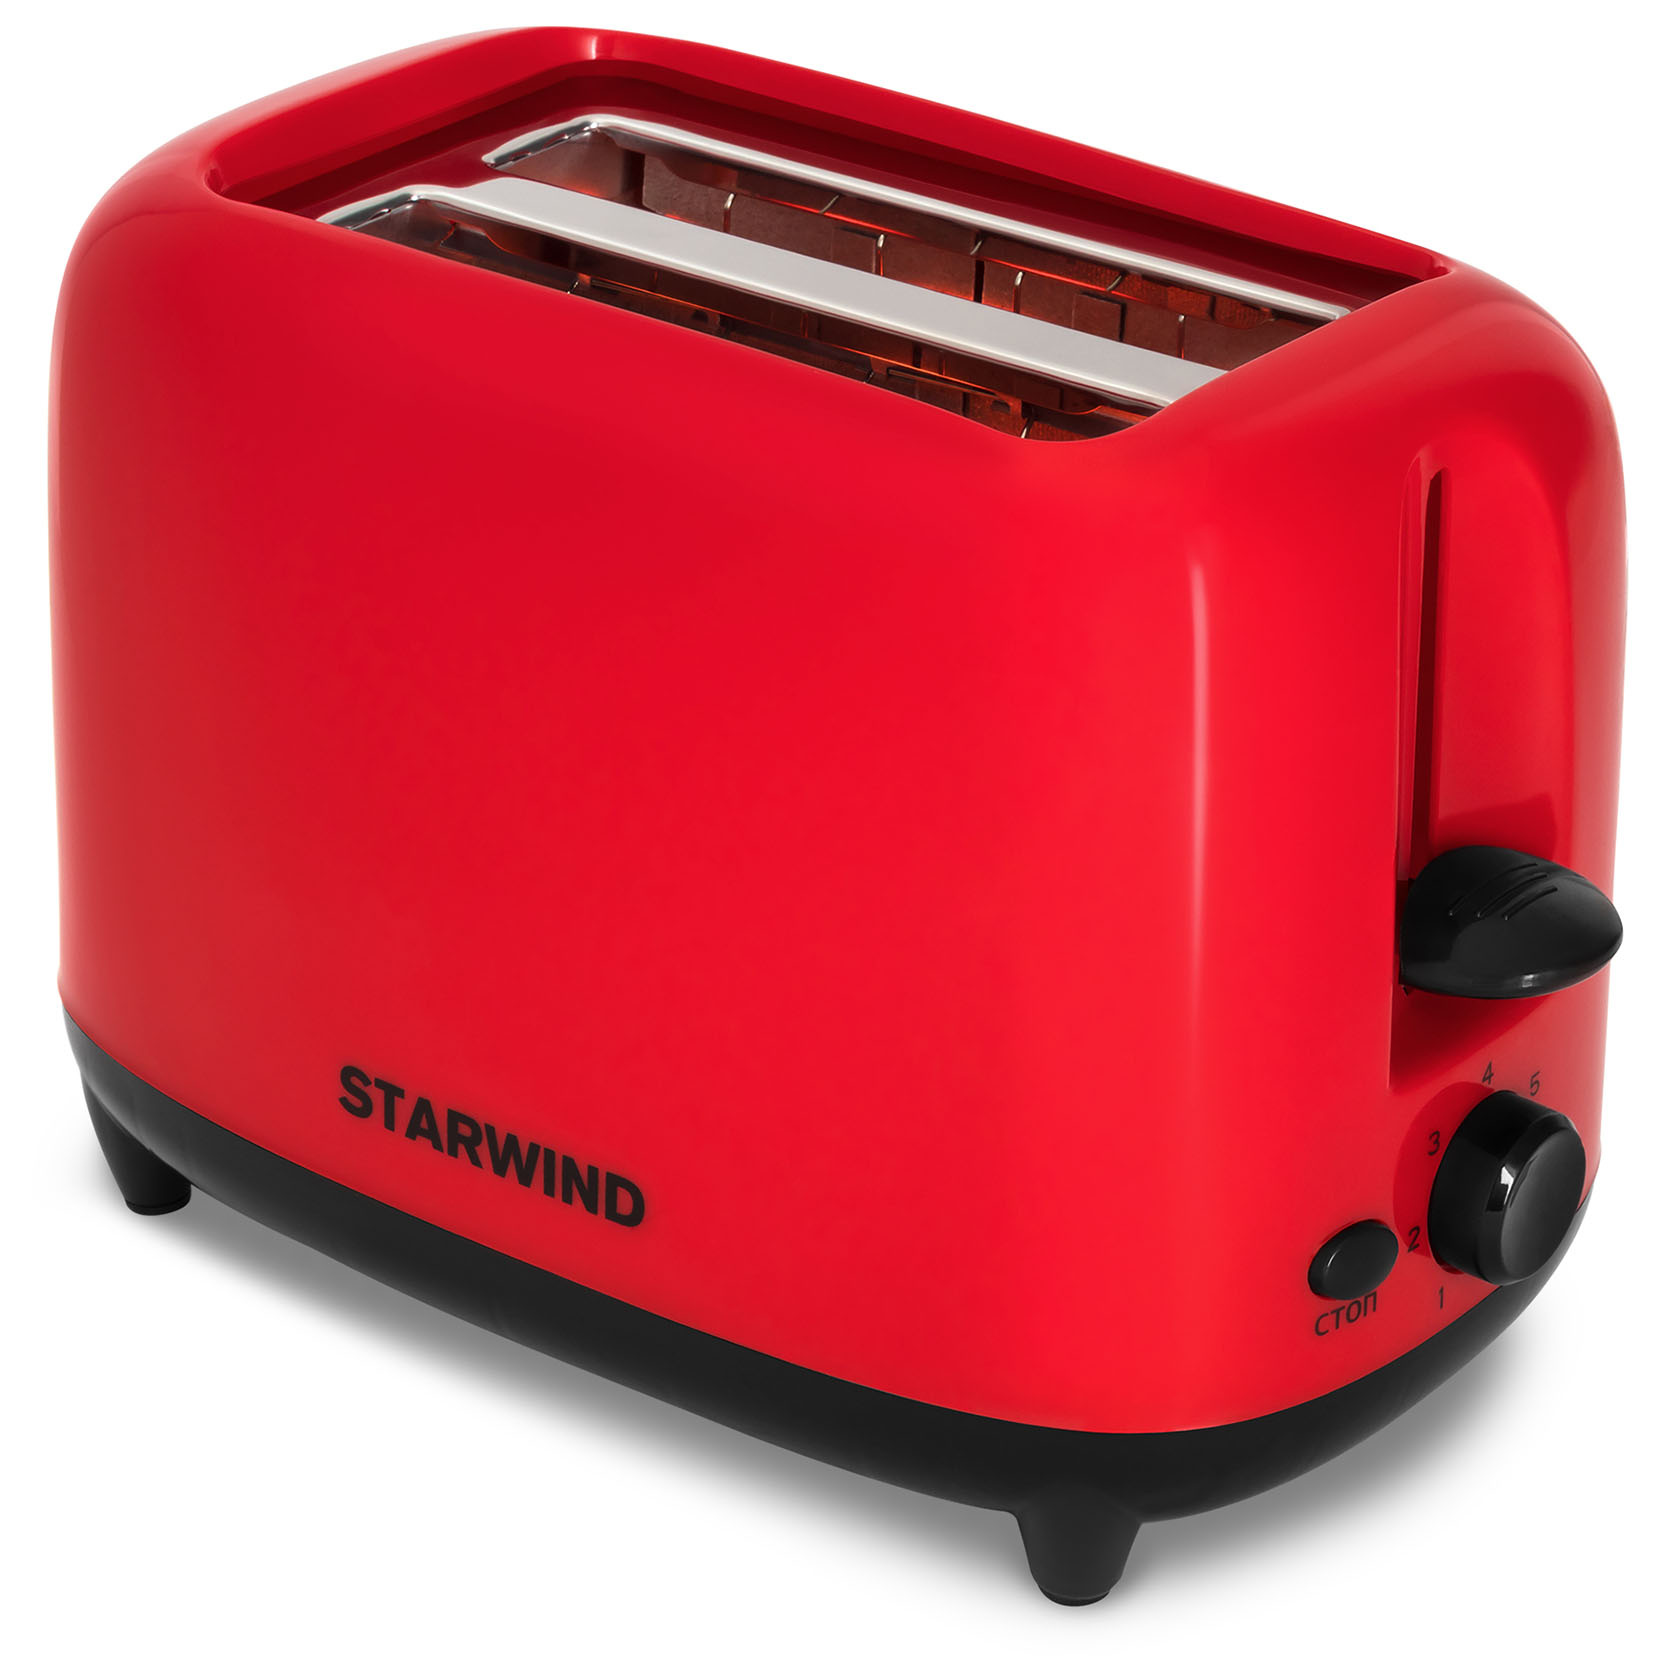 Тостер STARWIND ST7003 красный, черный тостер starwind st7003 700 вт красный чёрный